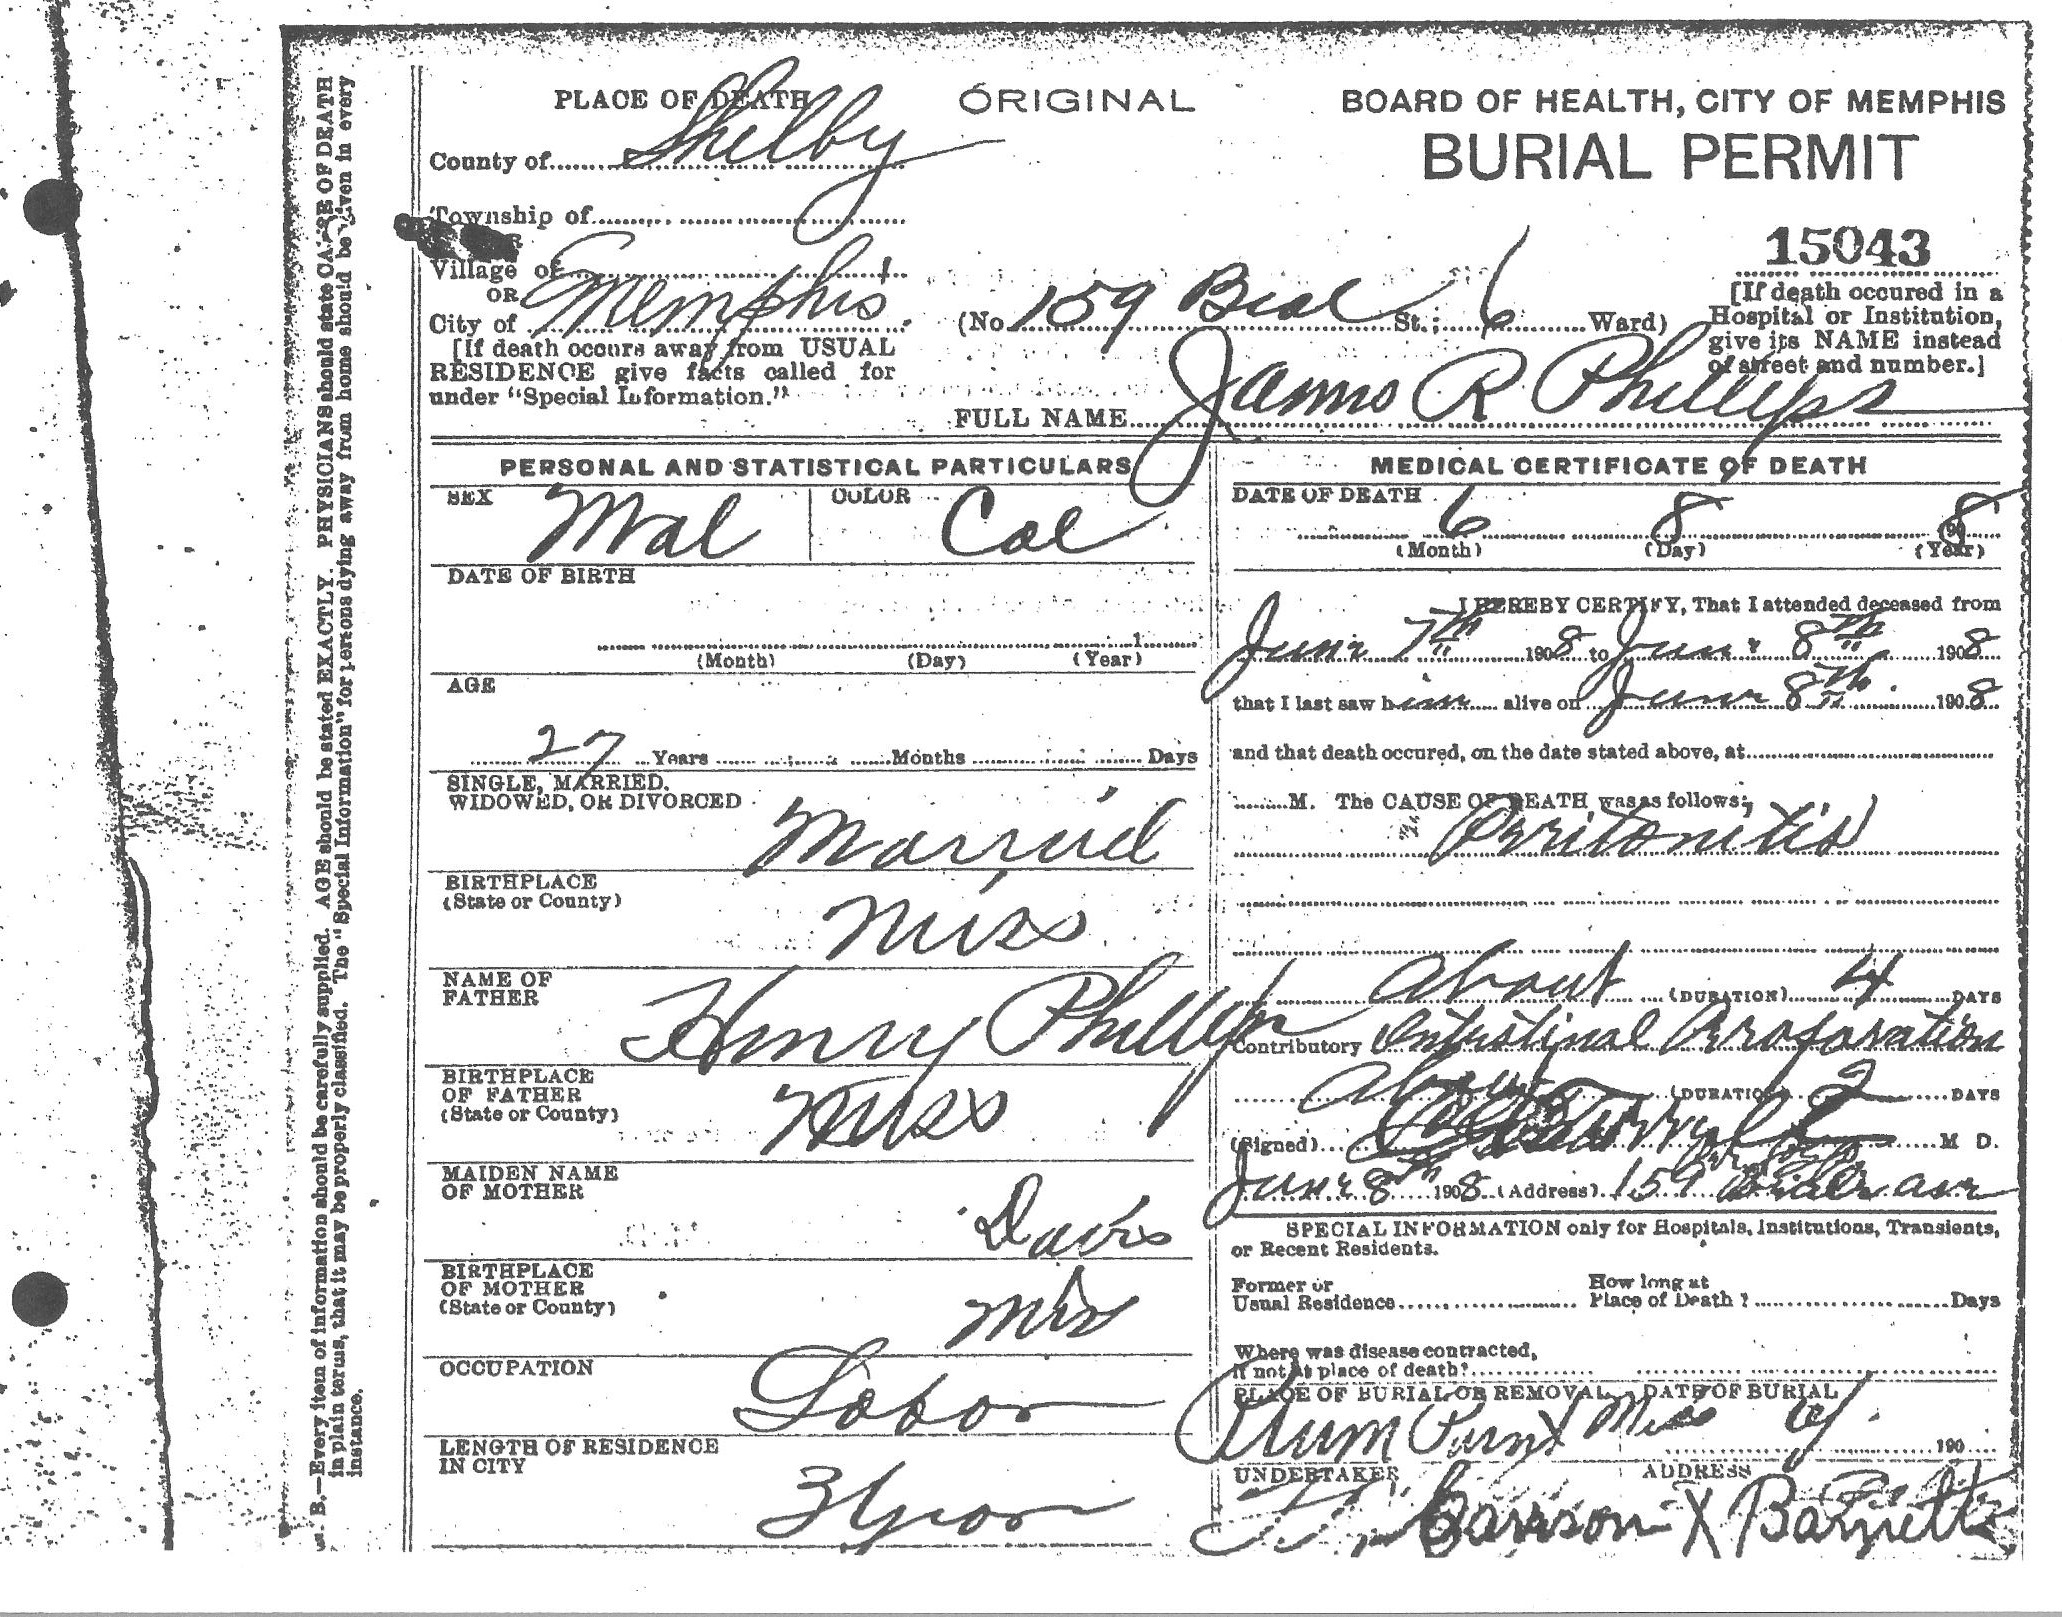 James R. Phillips' Death Certificate